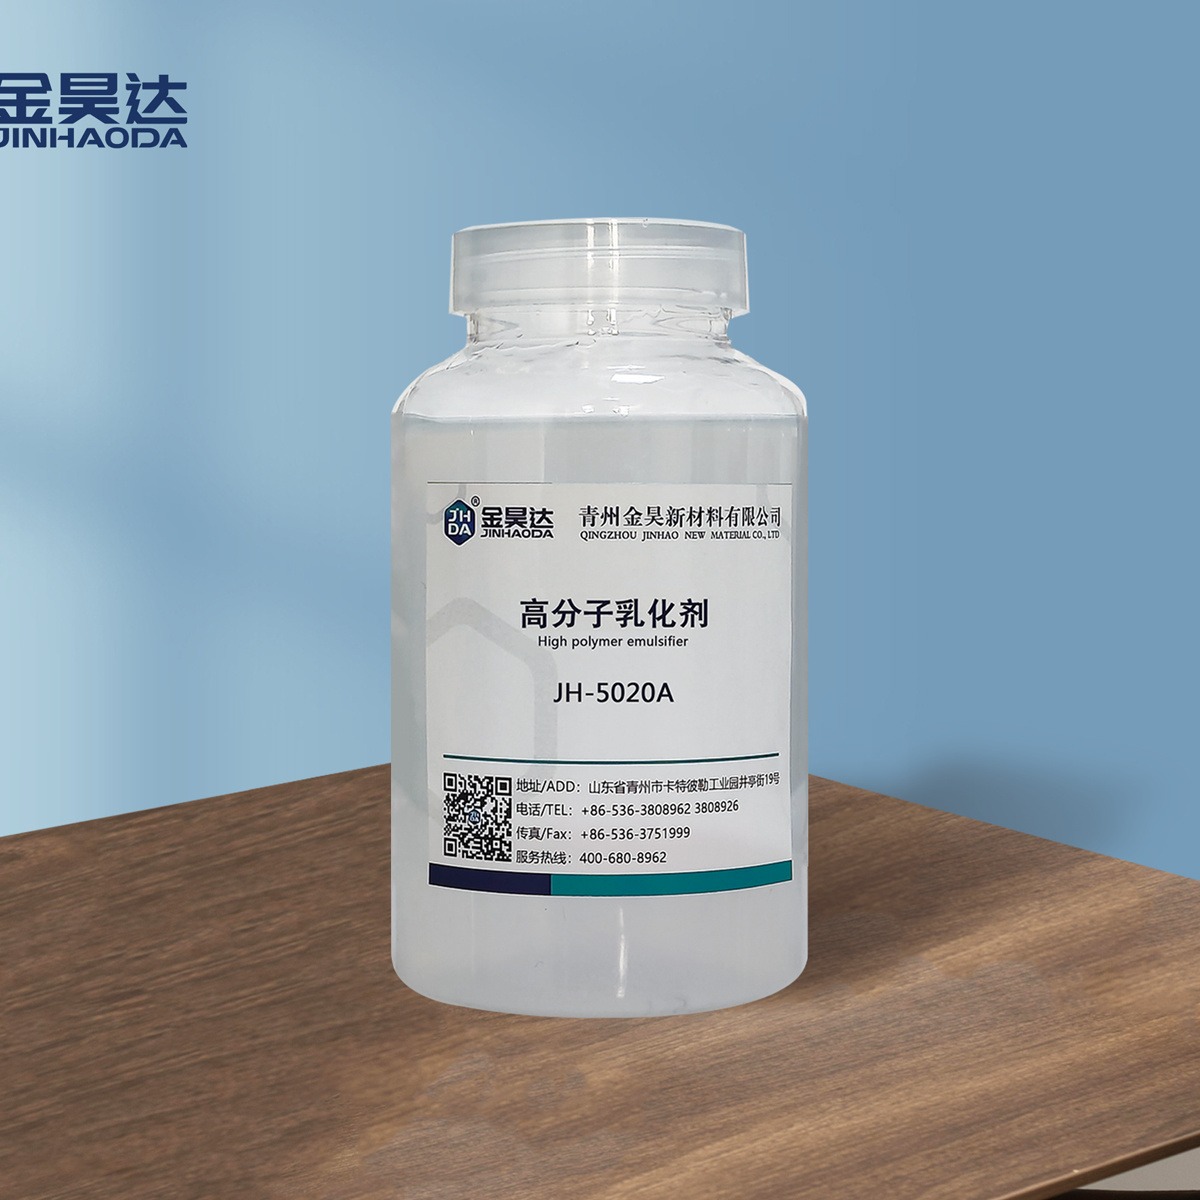 JH-5020A高分子akd乳化剂生产厂家  AKD乳化剂 对AKD乳胶起保护作用，加速AKD的熟化